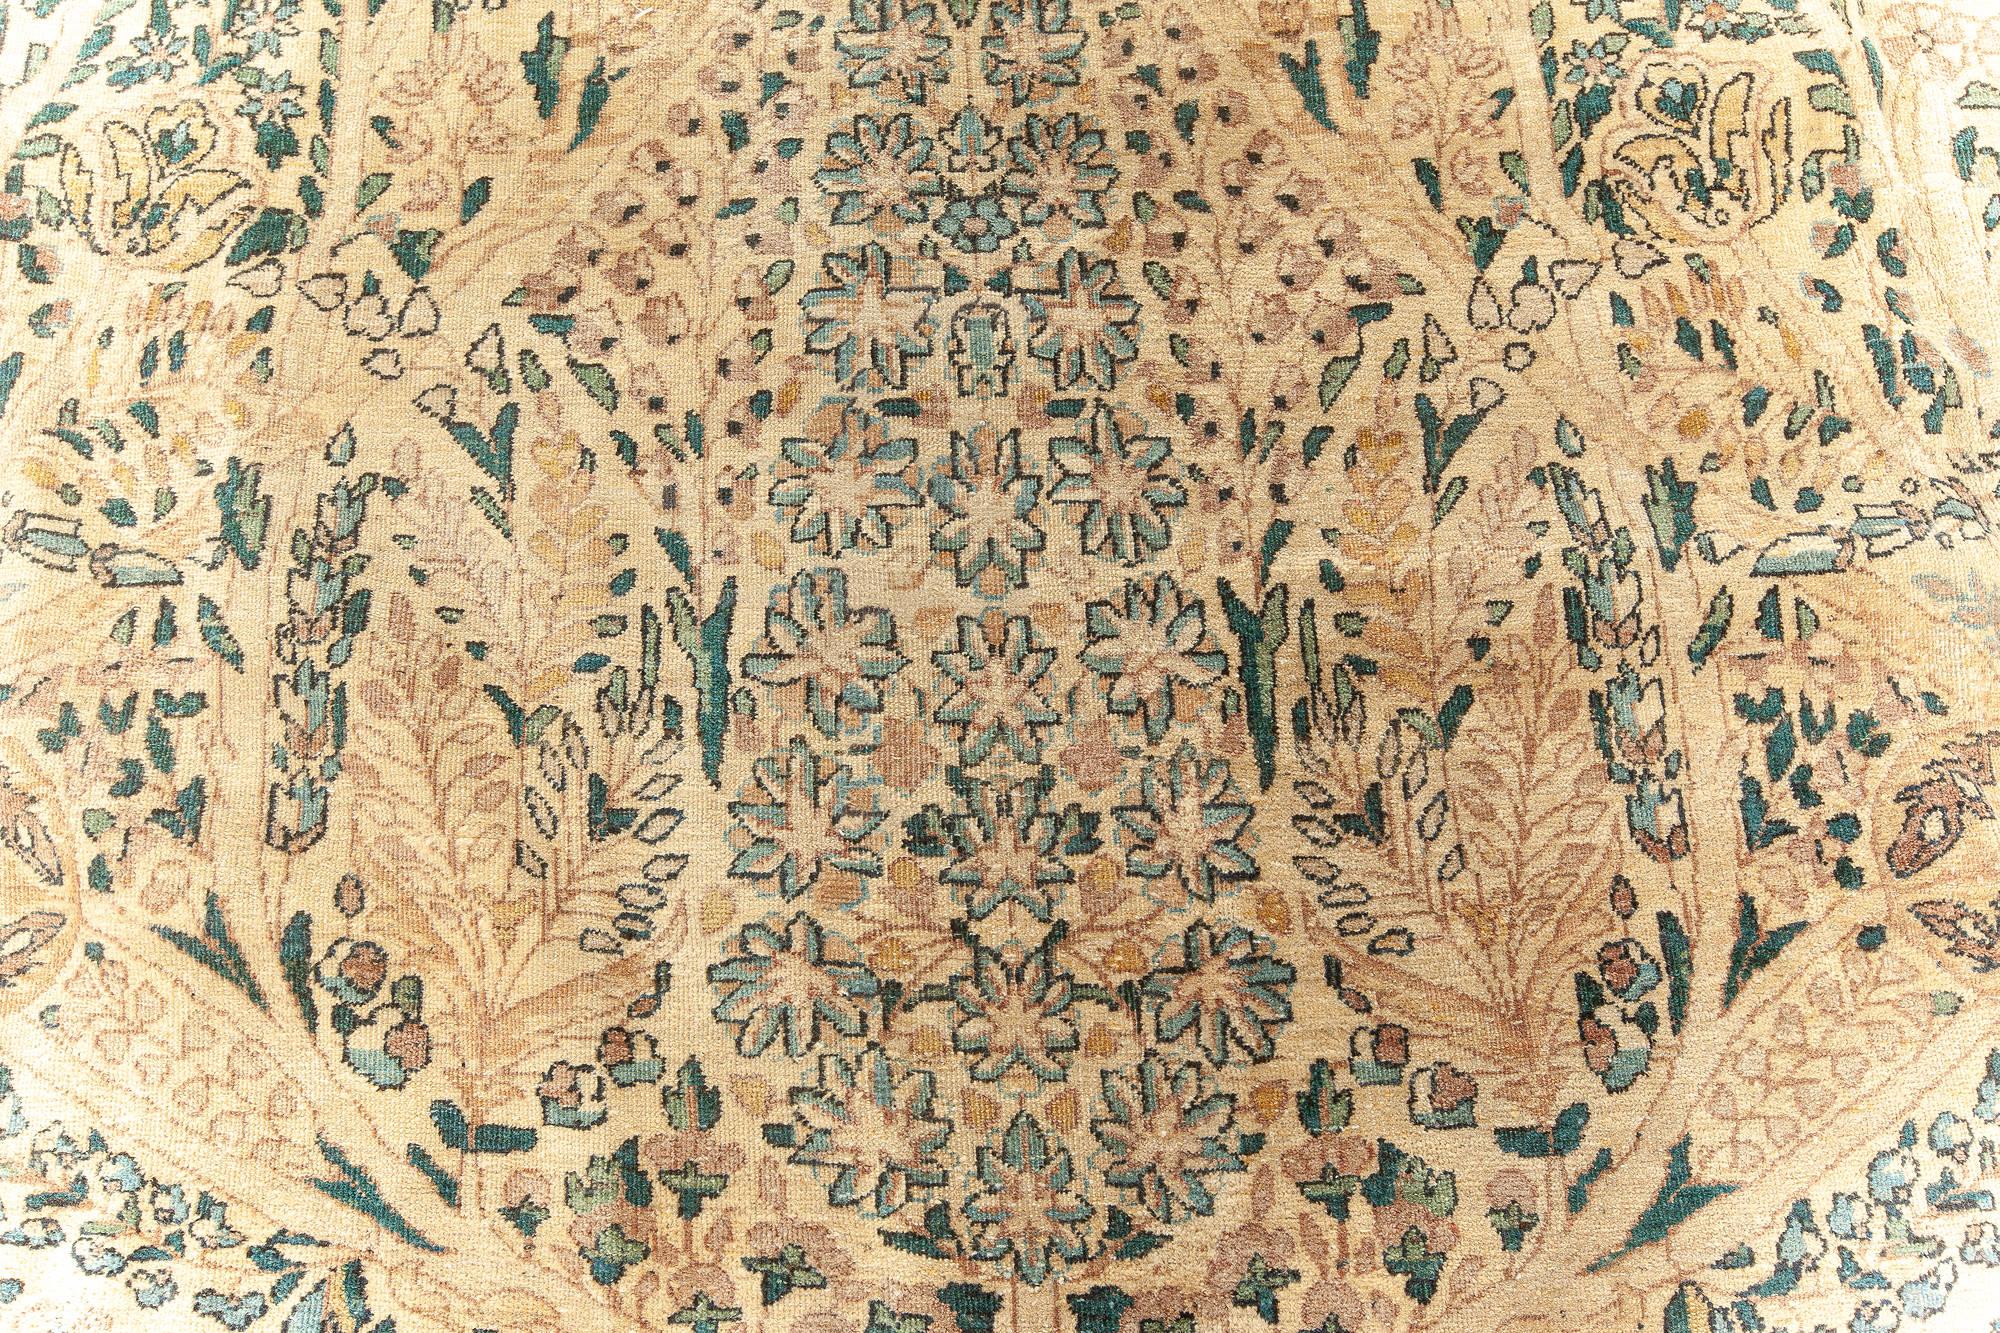 Authentic Persian Kirman handwoven wool carpet
Size: 10'2